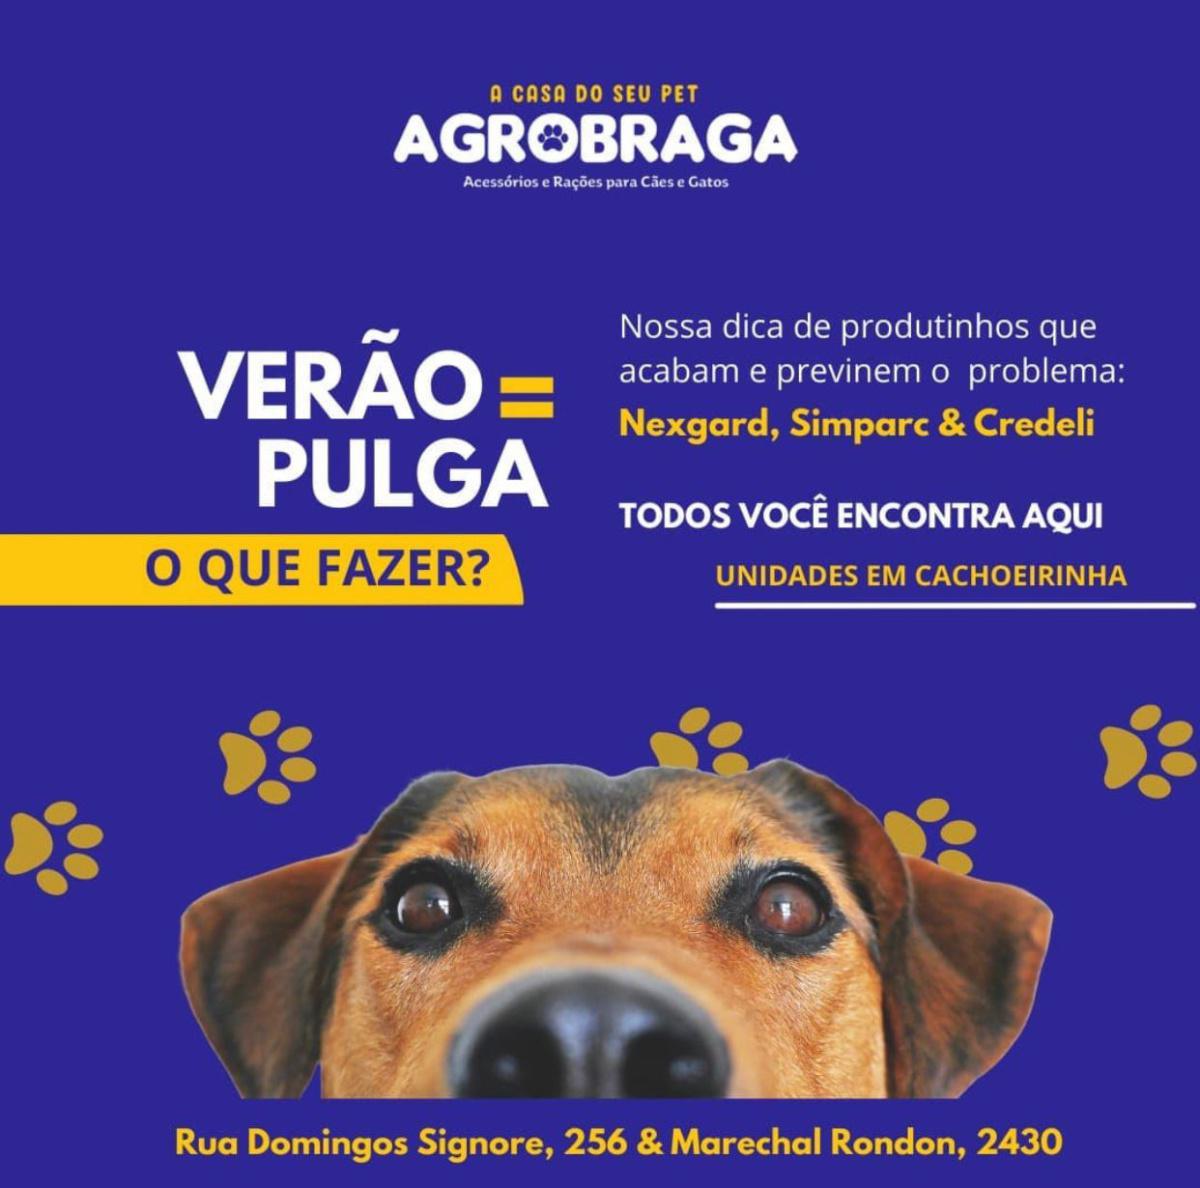 Agro Braga